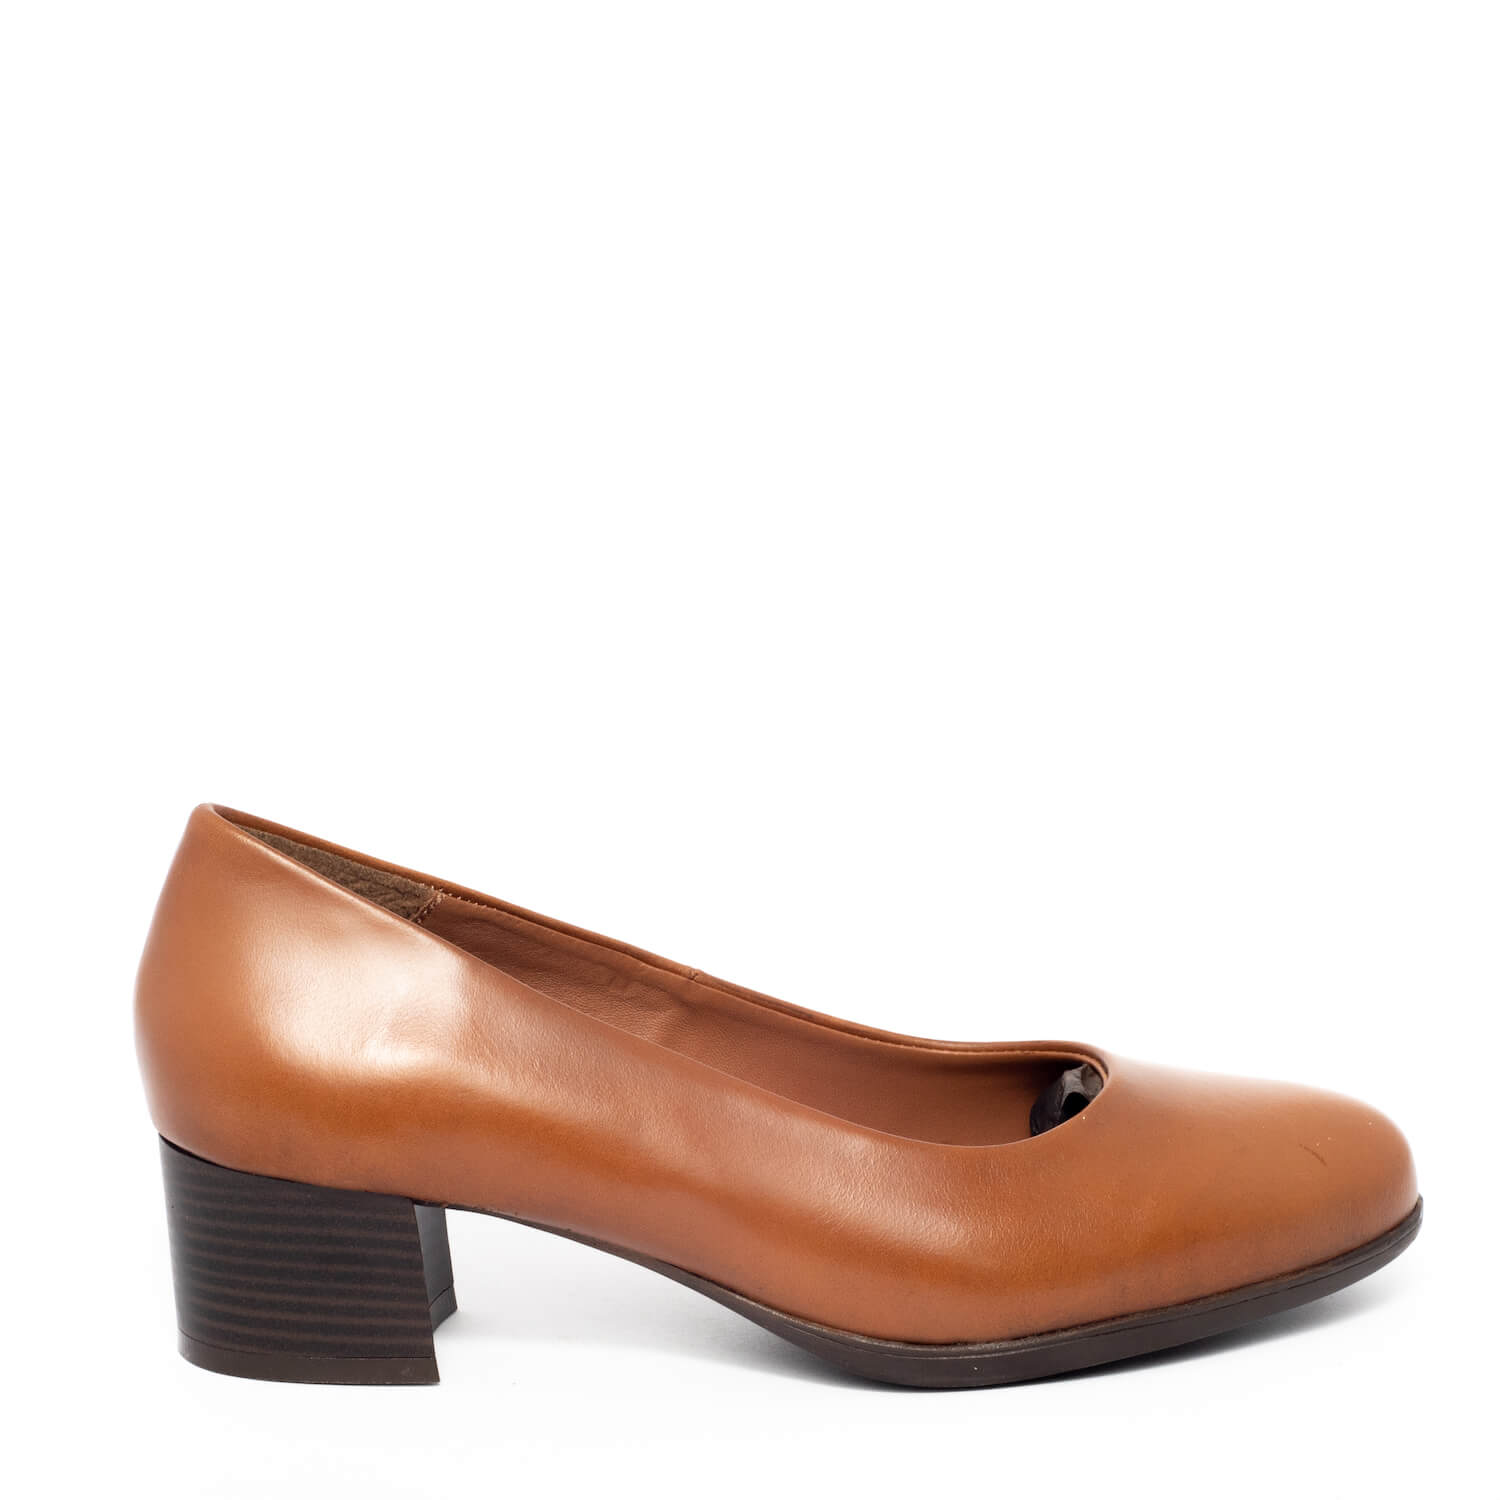 Spanish Women Havan Leather Shoes #9044 - Scarpa Egypt